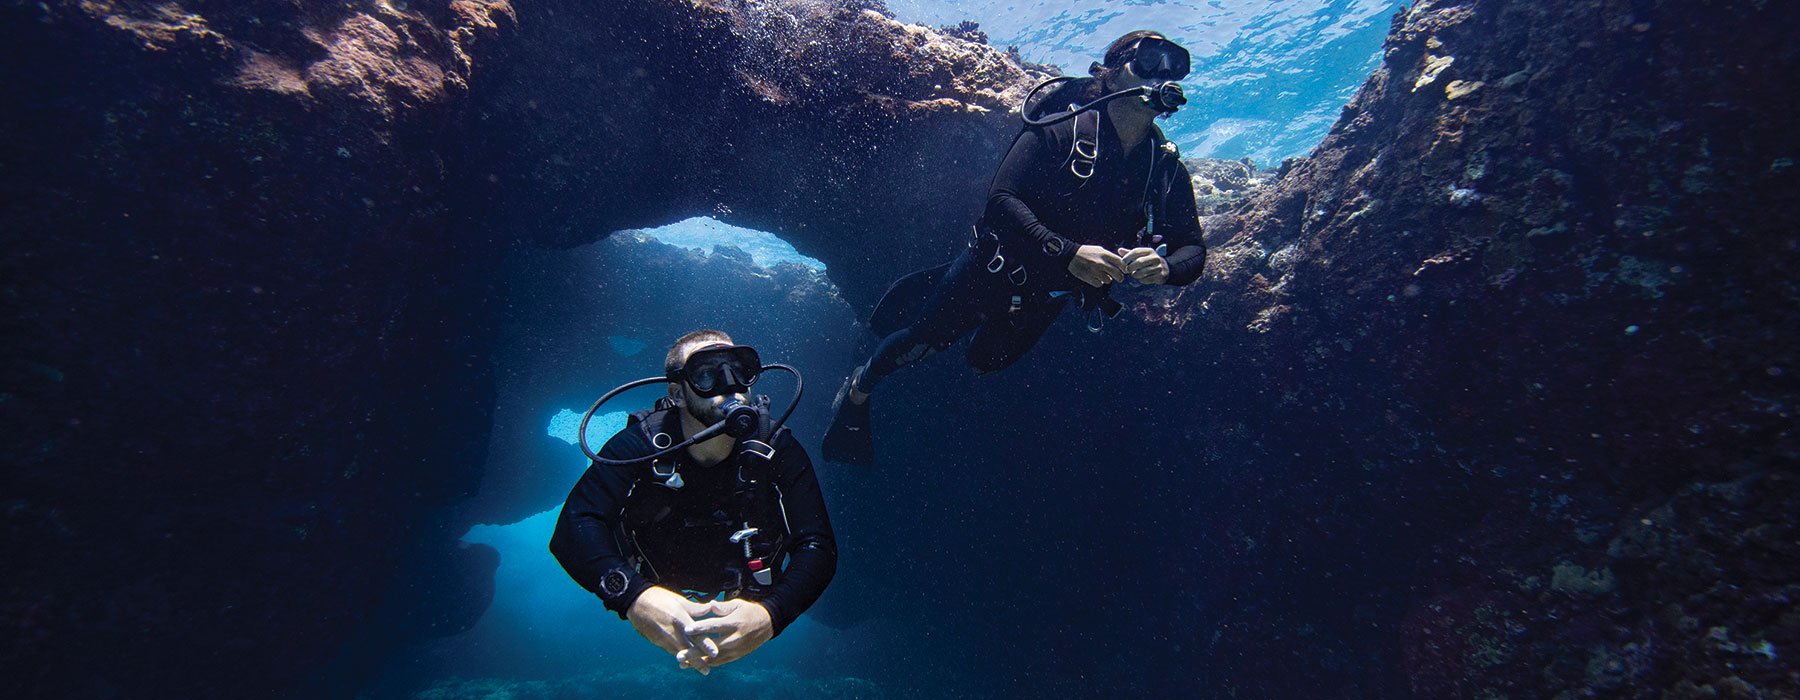 Dive Science - 2 divers diving in the ocean